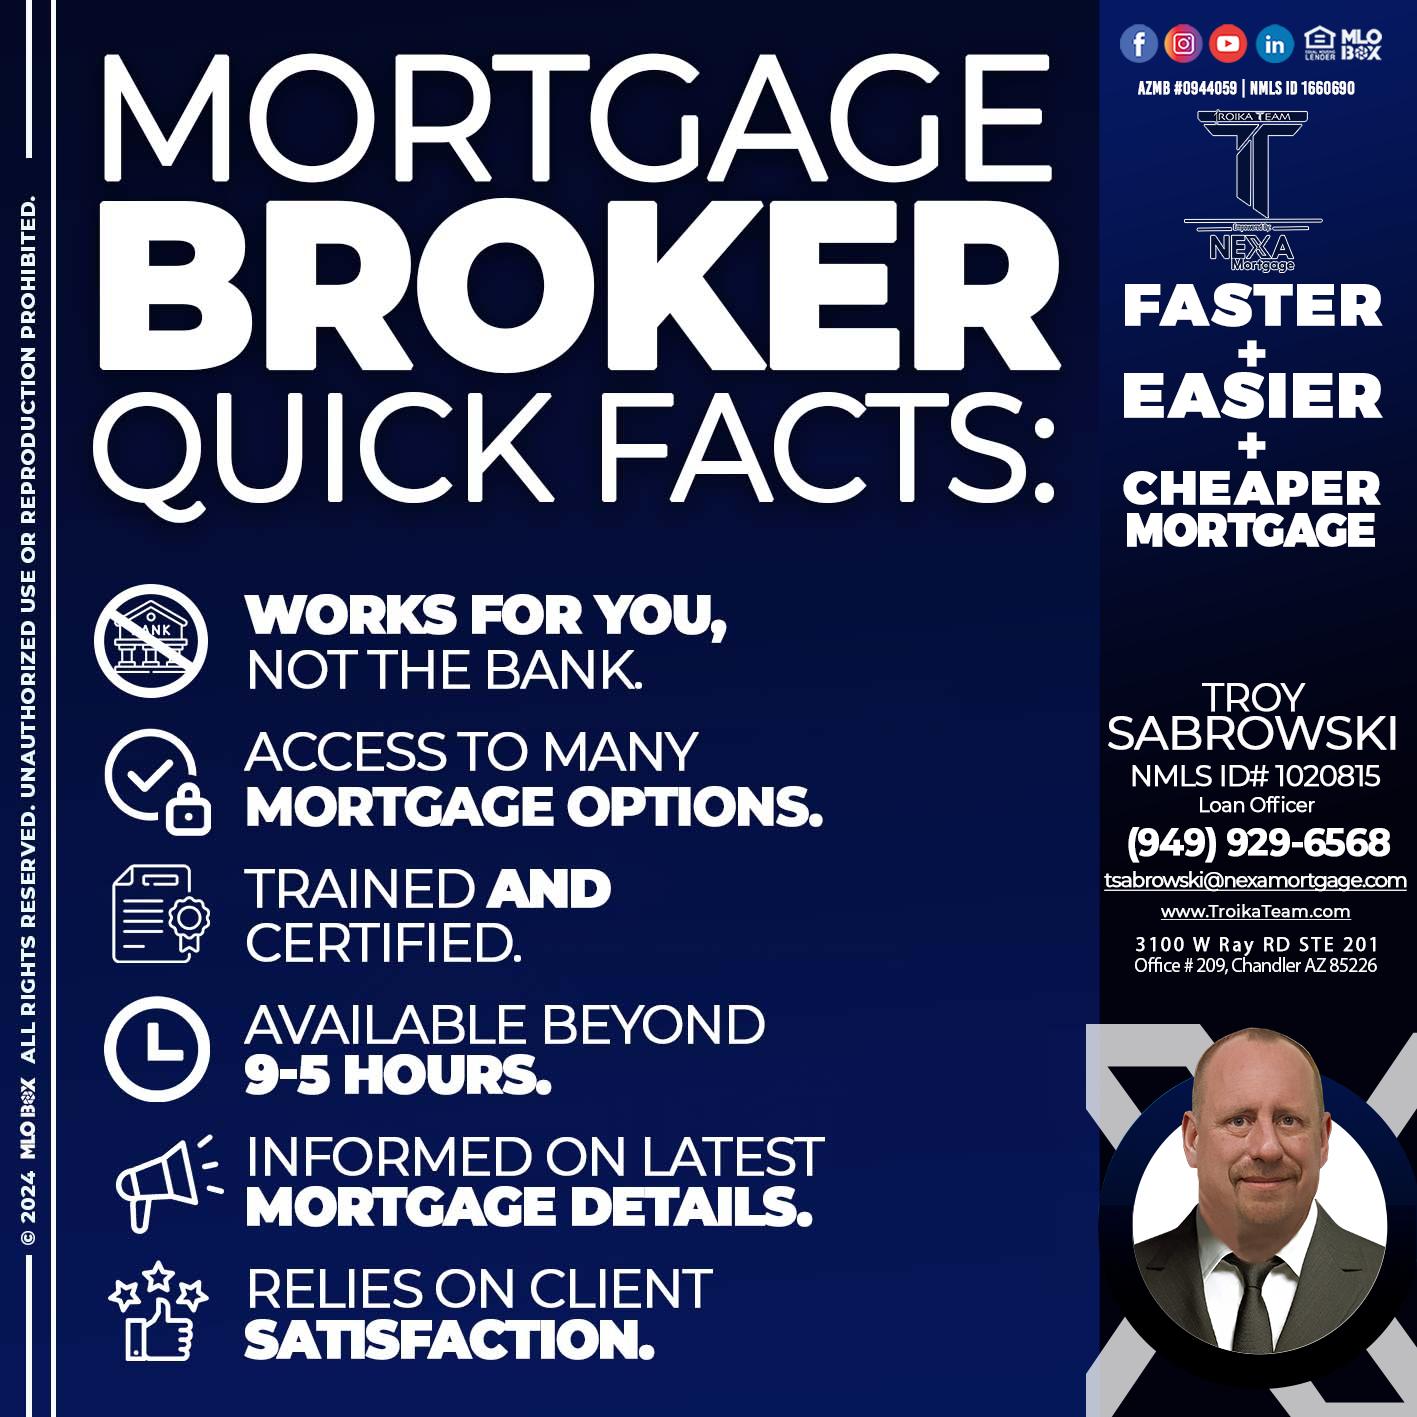 mortgage broker - Troy Sabrowski -Loan Officer